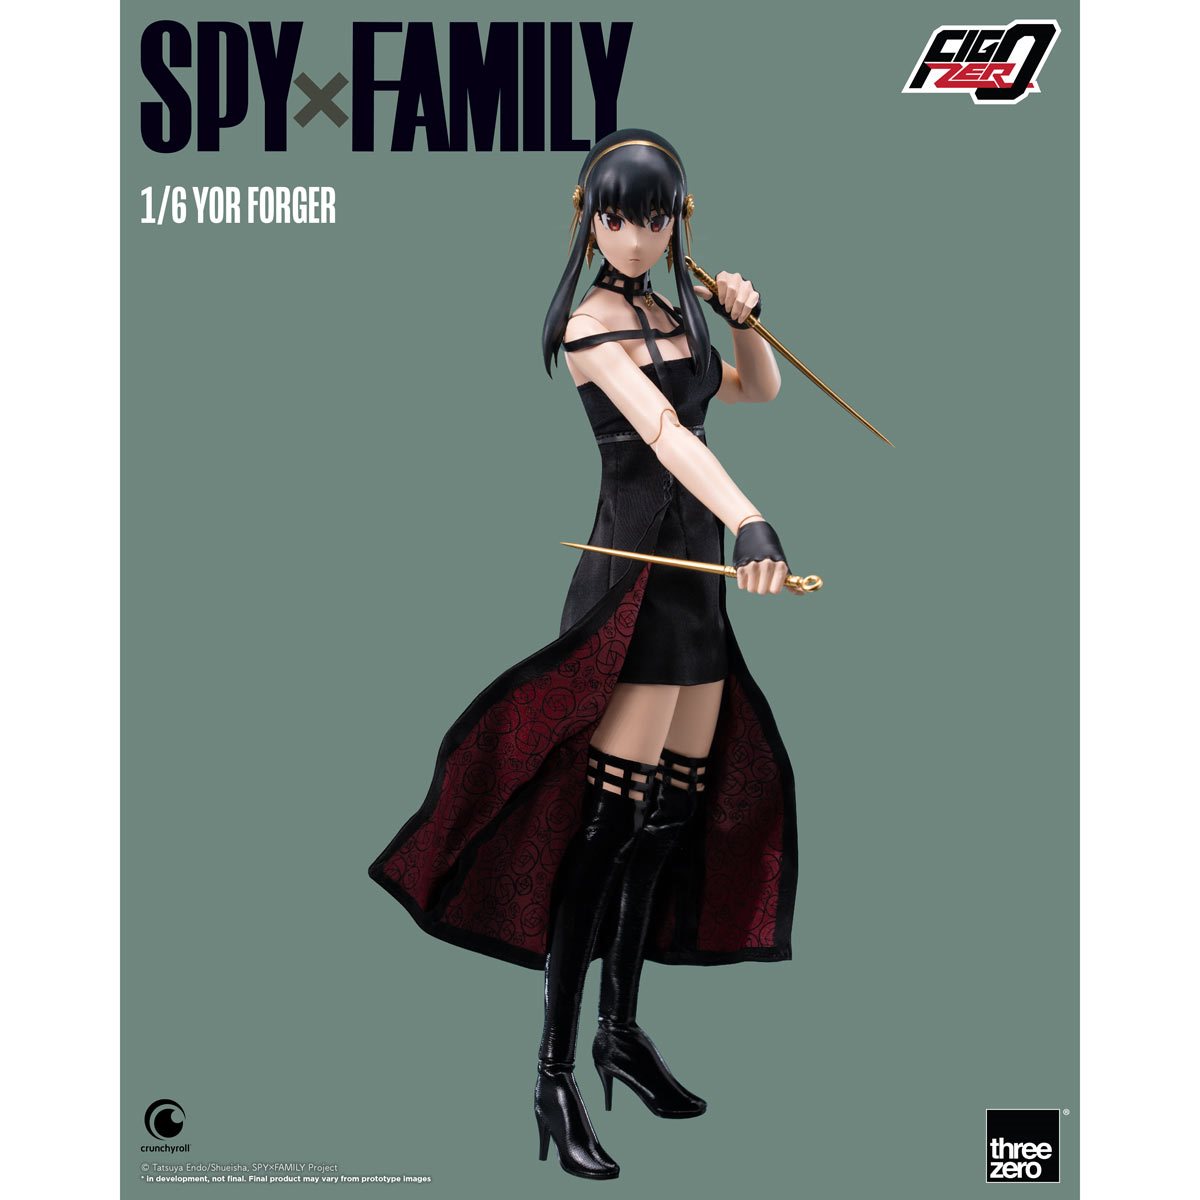 New Street Fighter 6 Spy x Family Code White Poster, Anime Spy x